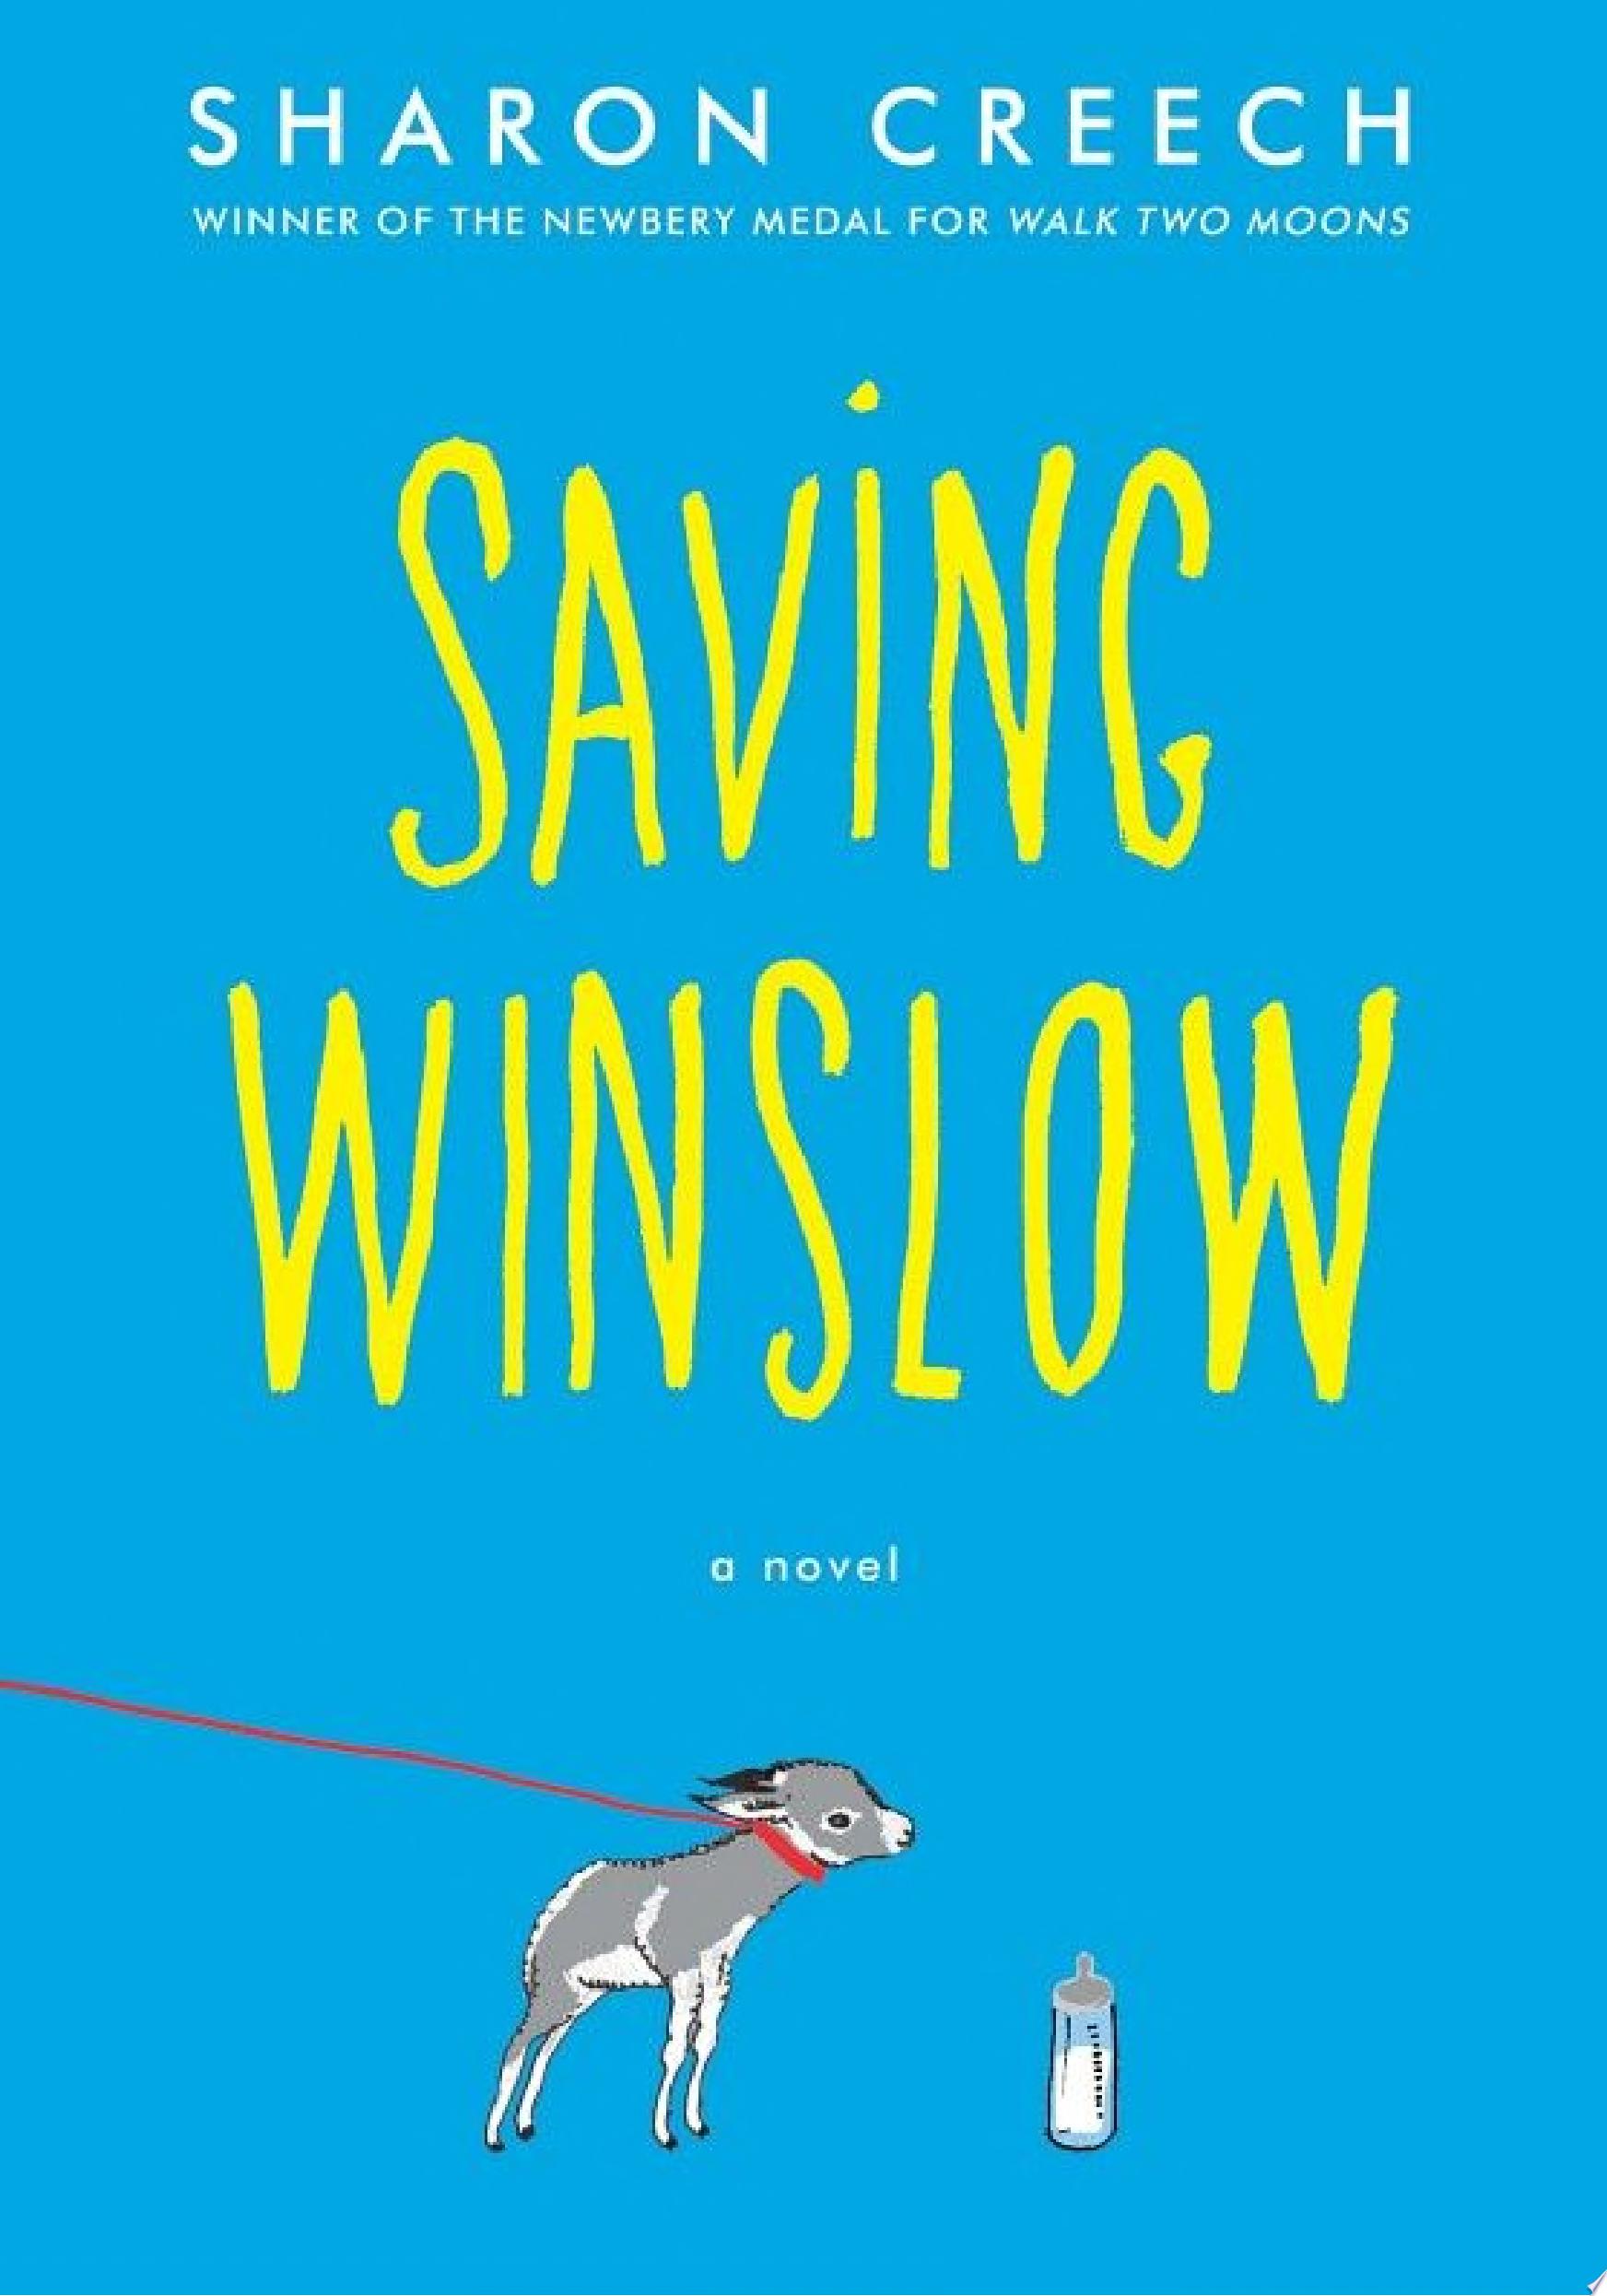 Image for "Saving Winslow"